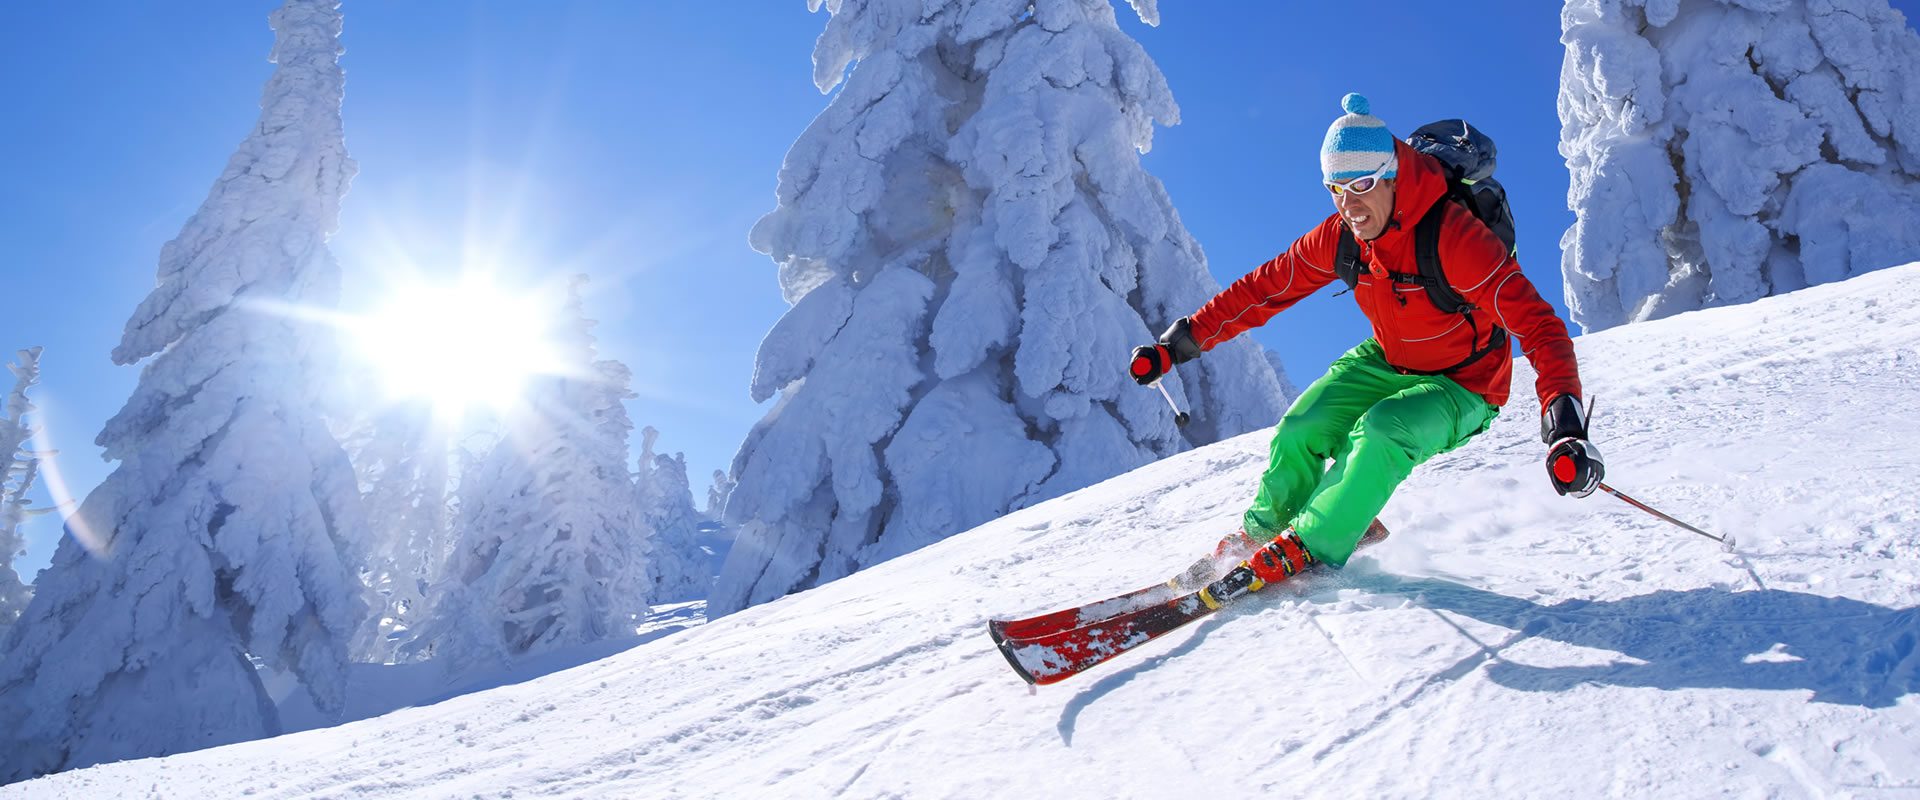 10 Reasons to choose La Tania for your ski holiday